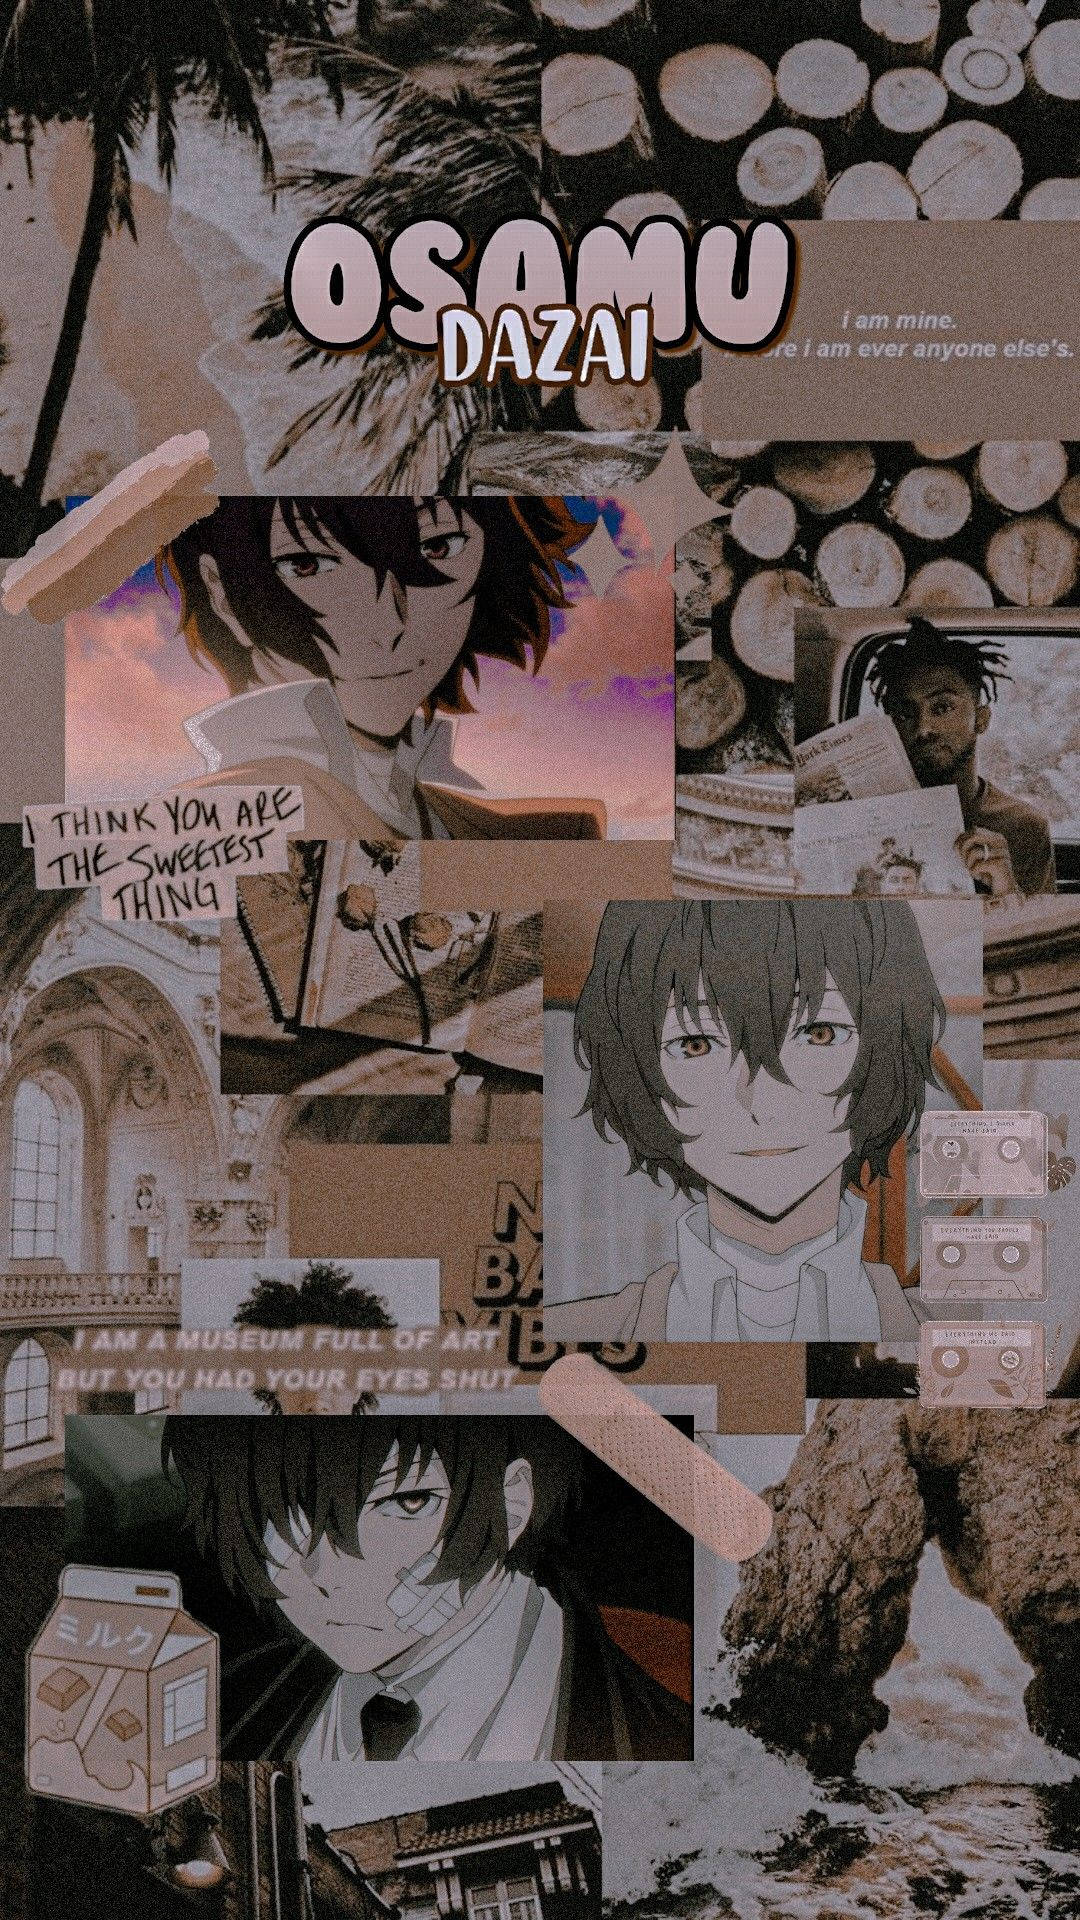 1080X1920 Dazai Wallpaper and Background